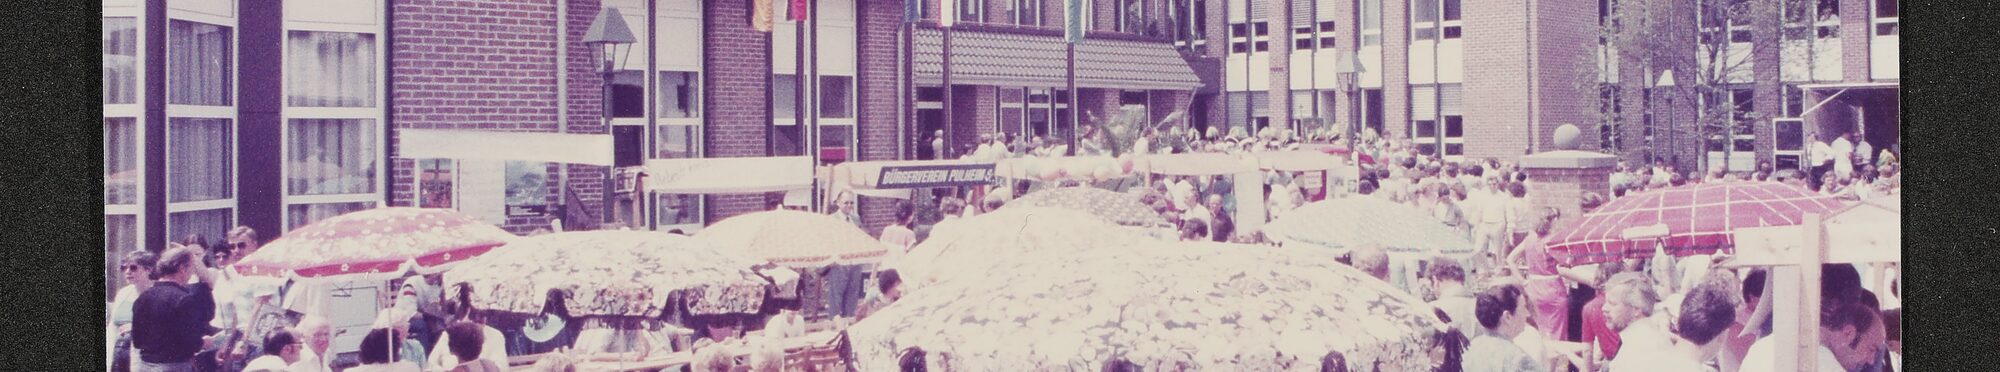 Stadtfest 1983